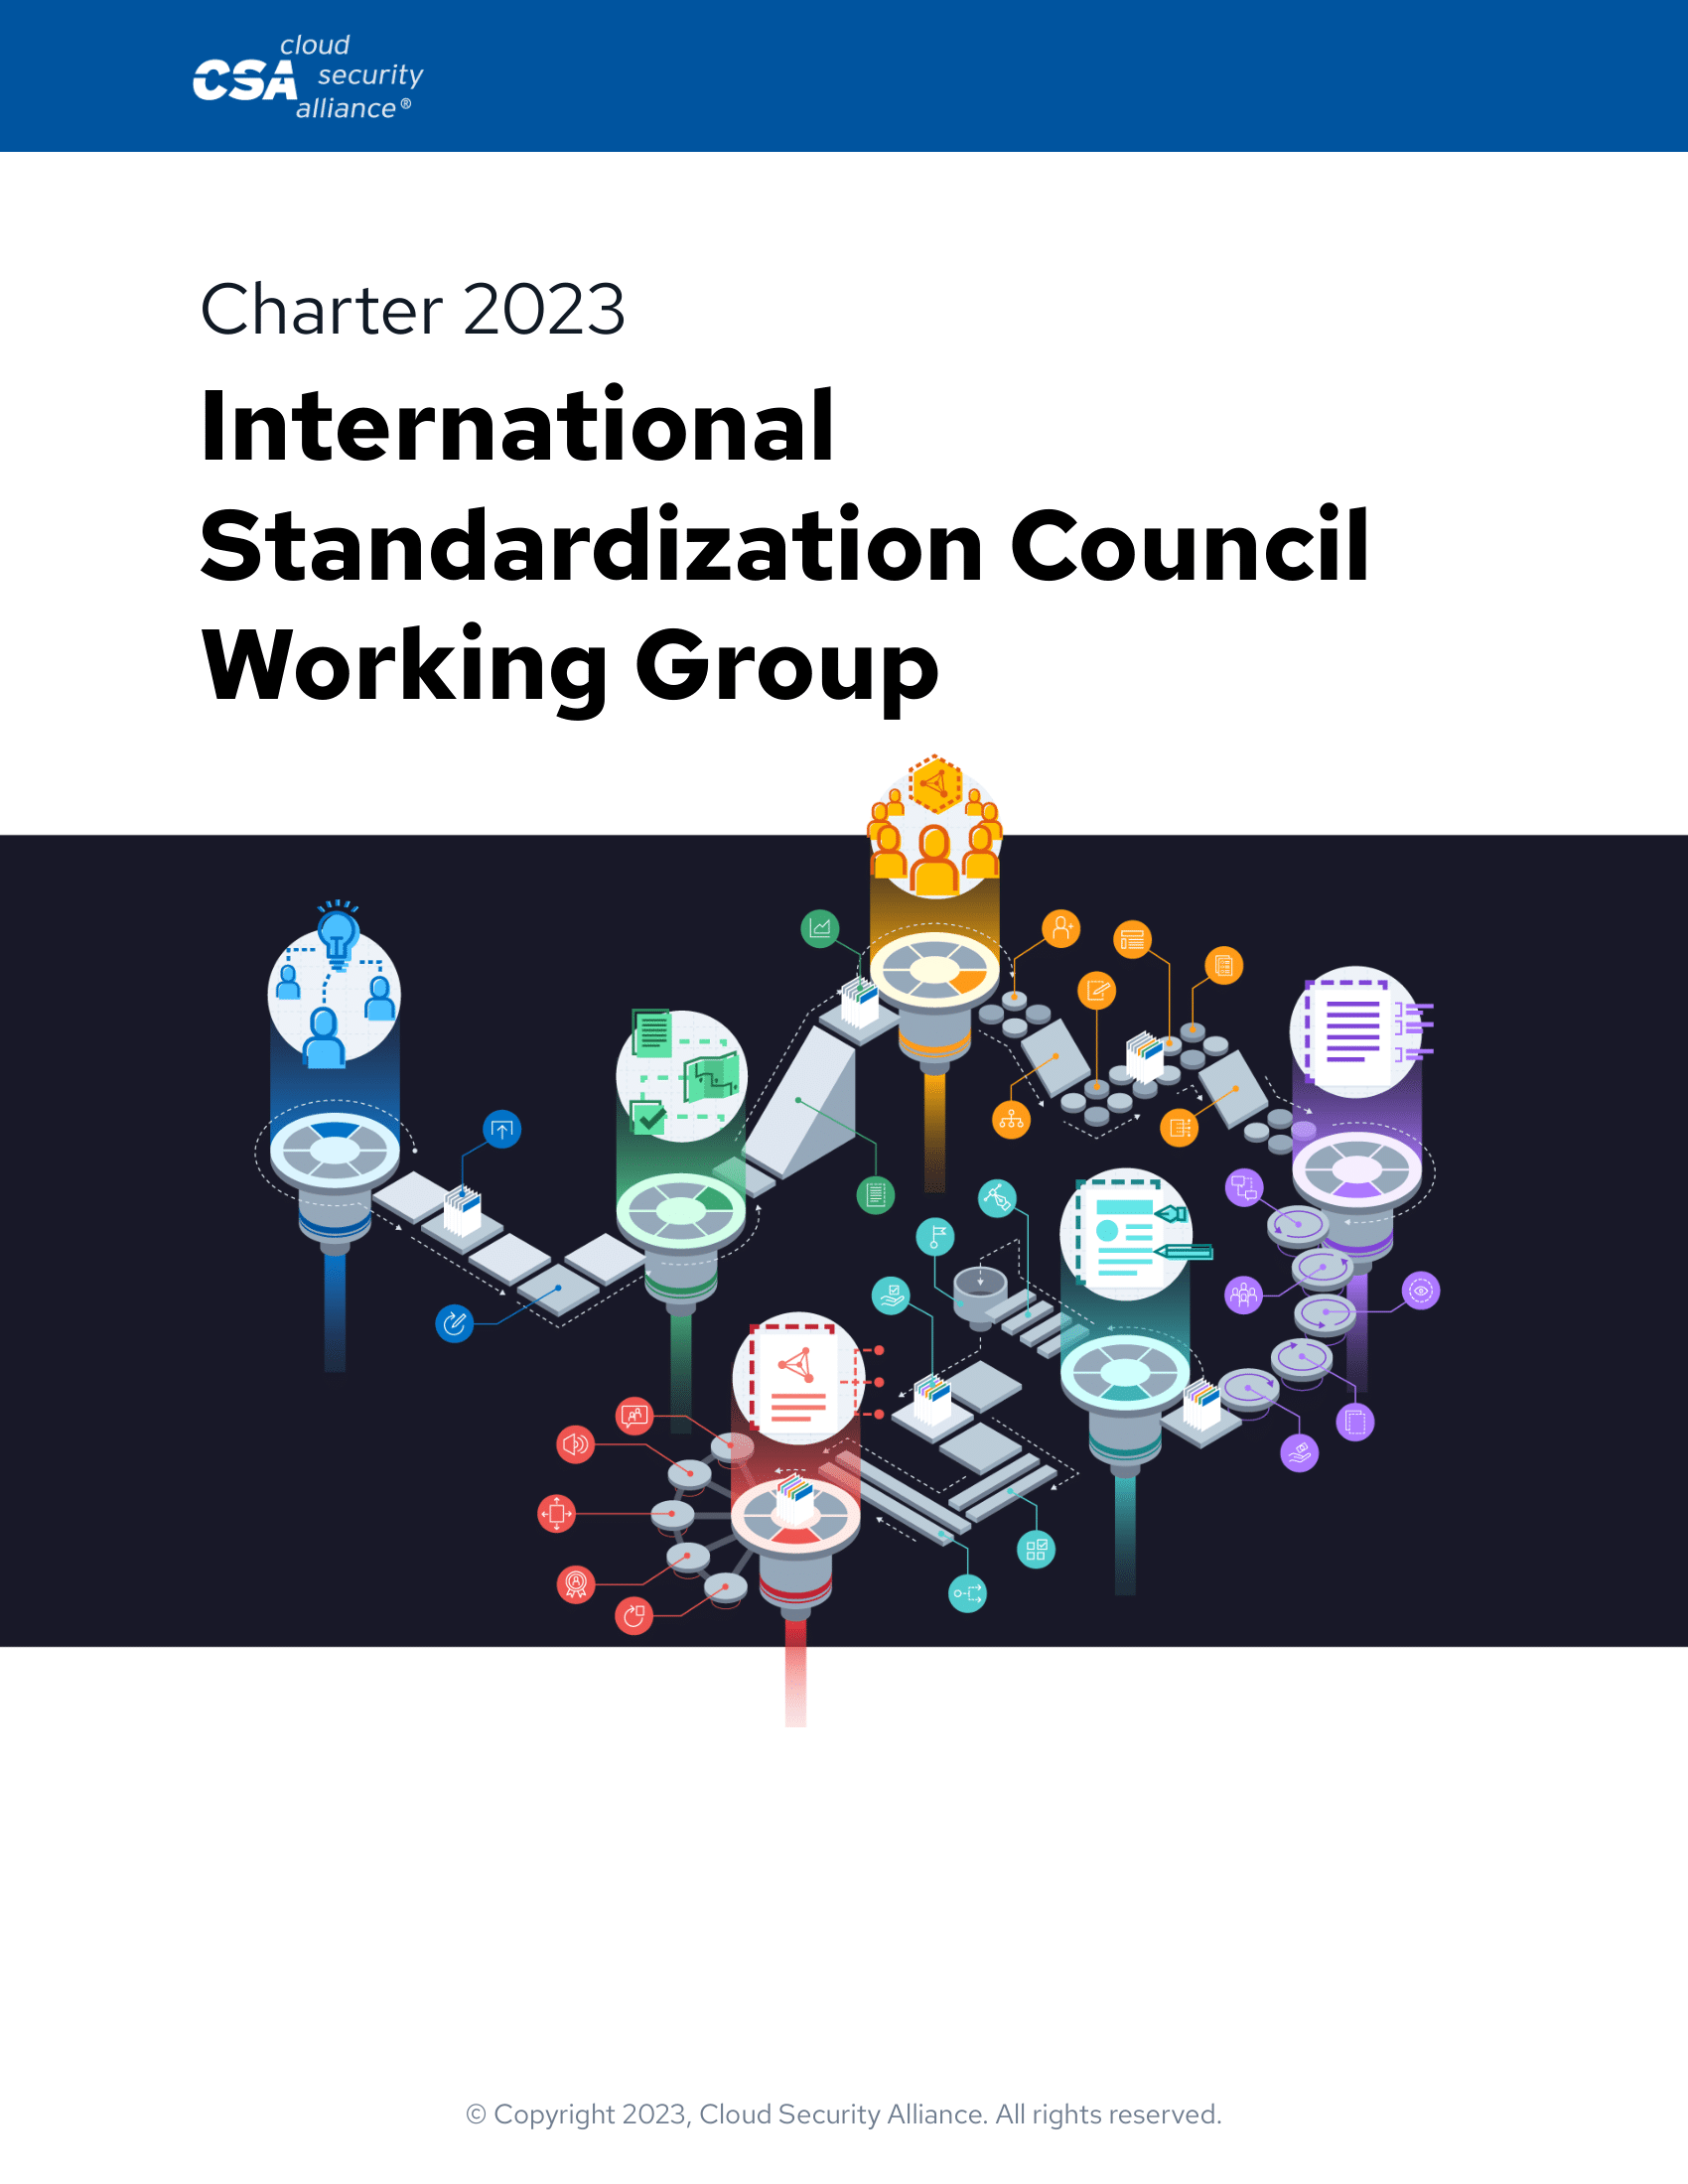 International Standardization Council Charter 2023